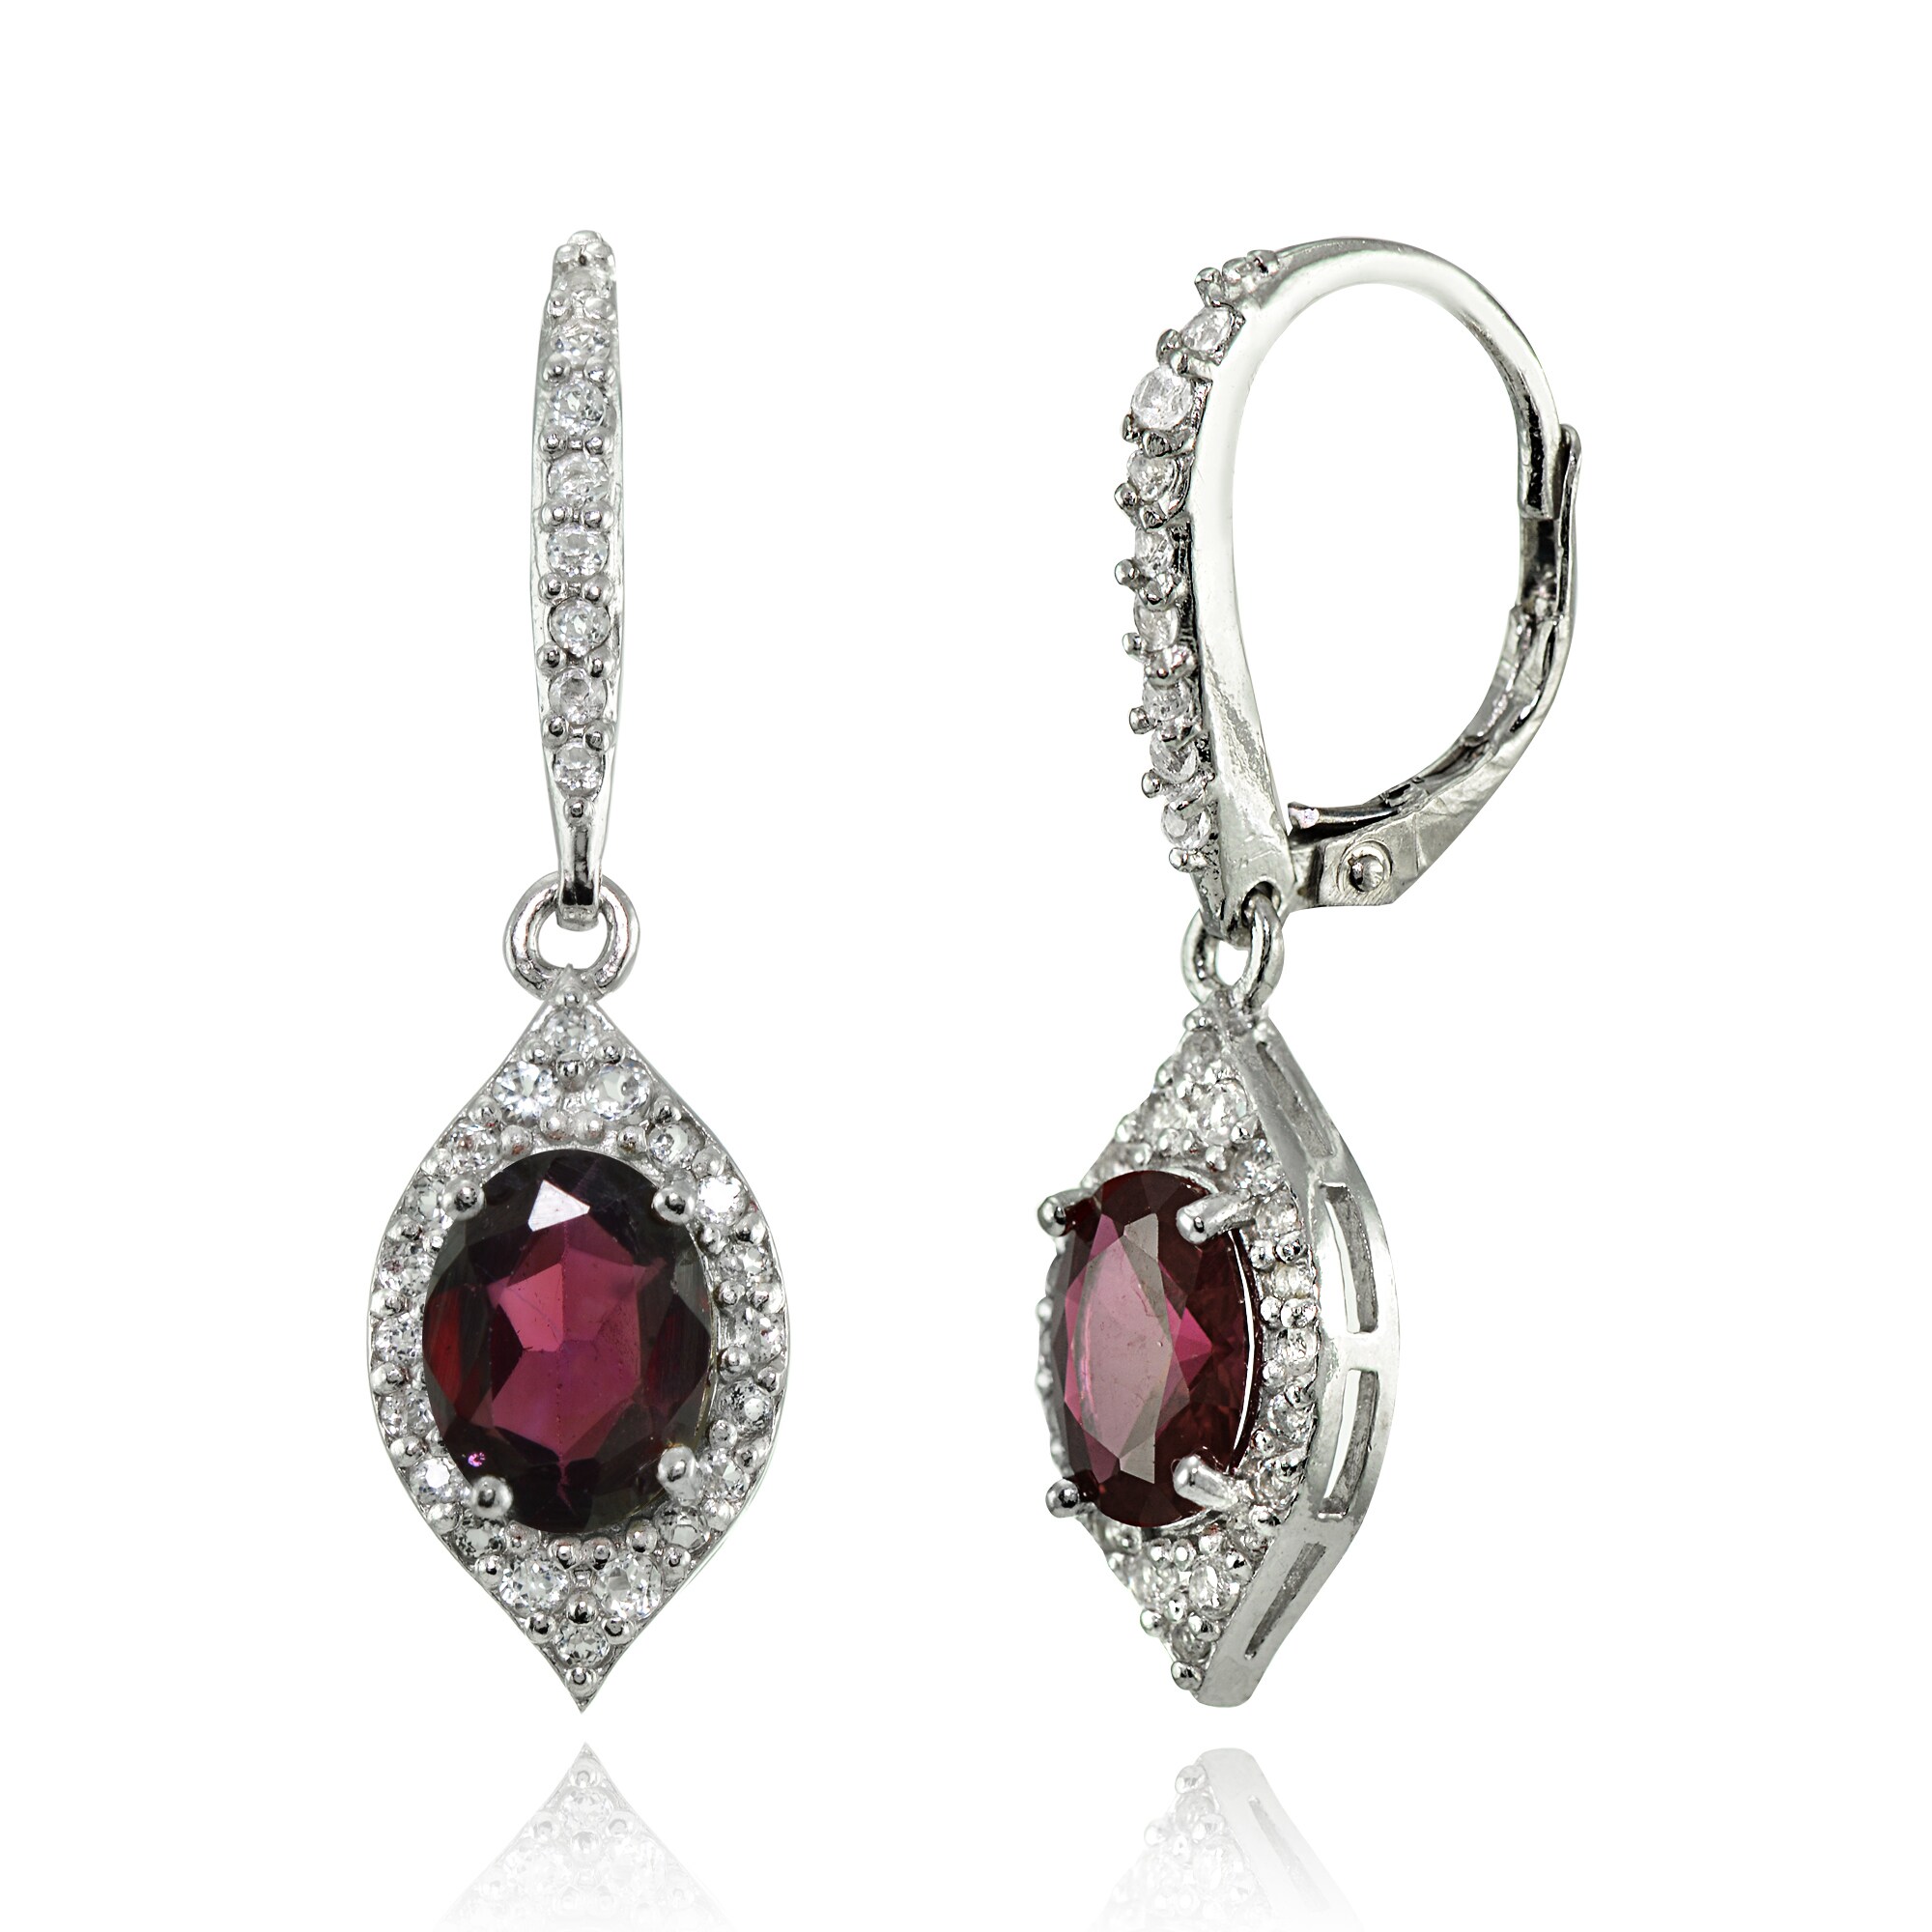 Oval Created Ruby Celtic Knot Drop Dangle Earrings in Sterling Silver